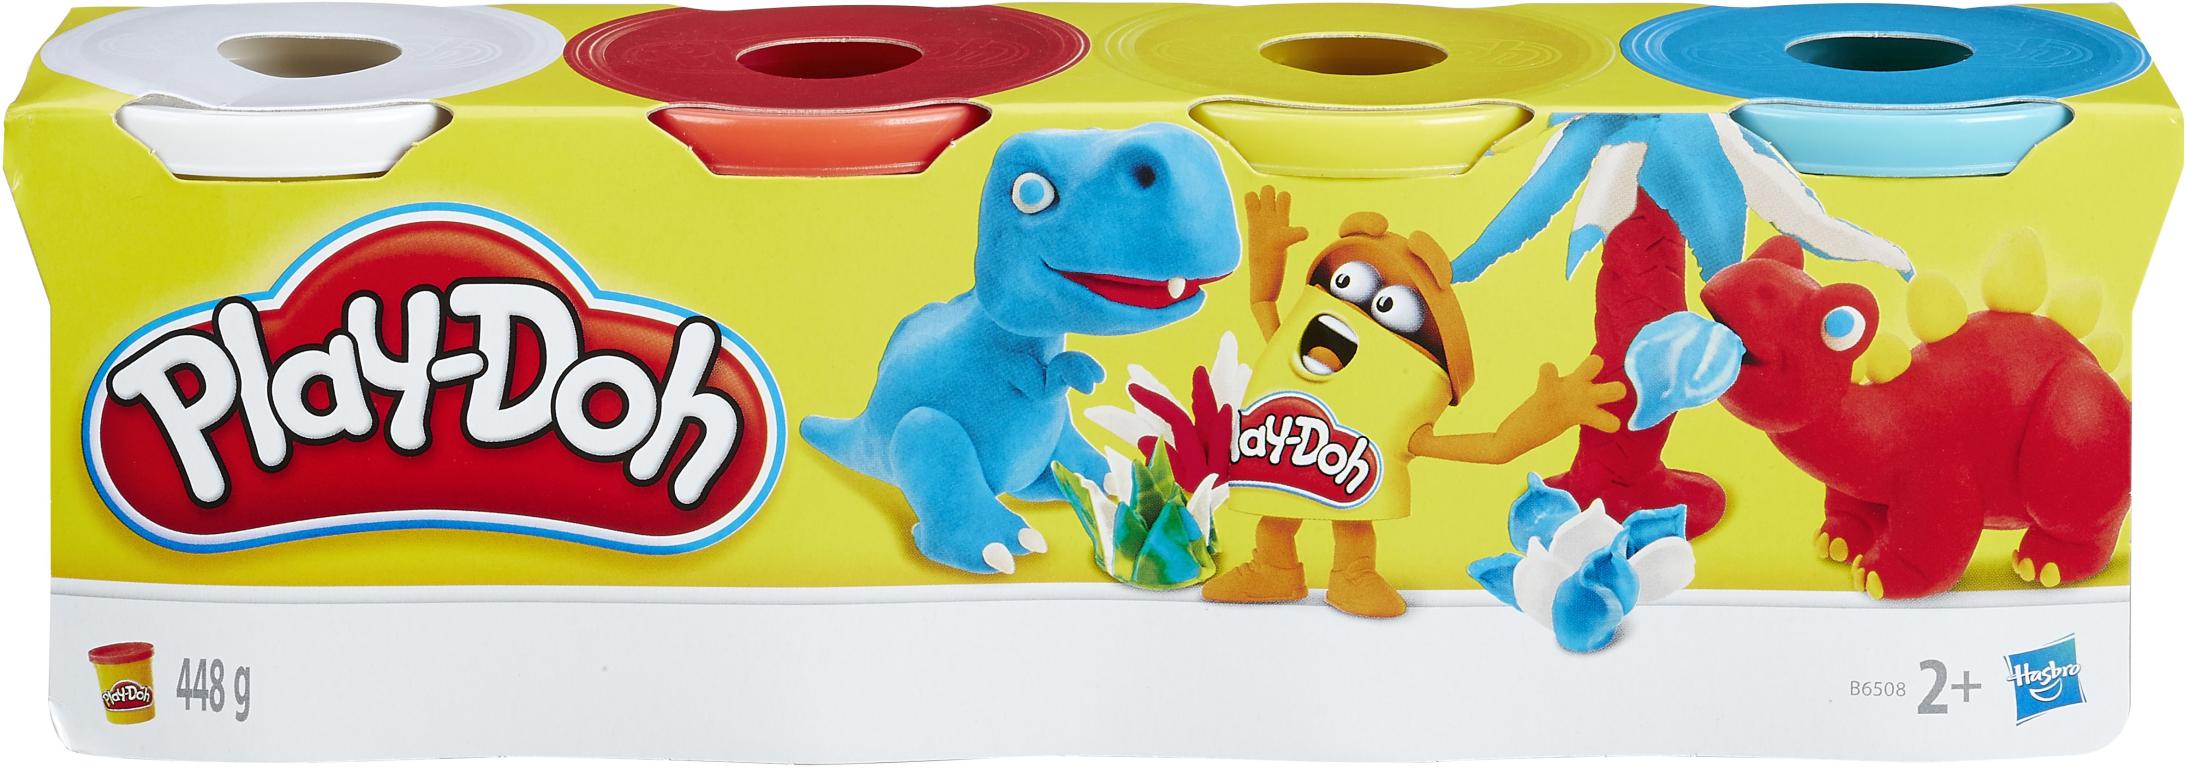 Image Play-Doh Knete farbsortiert